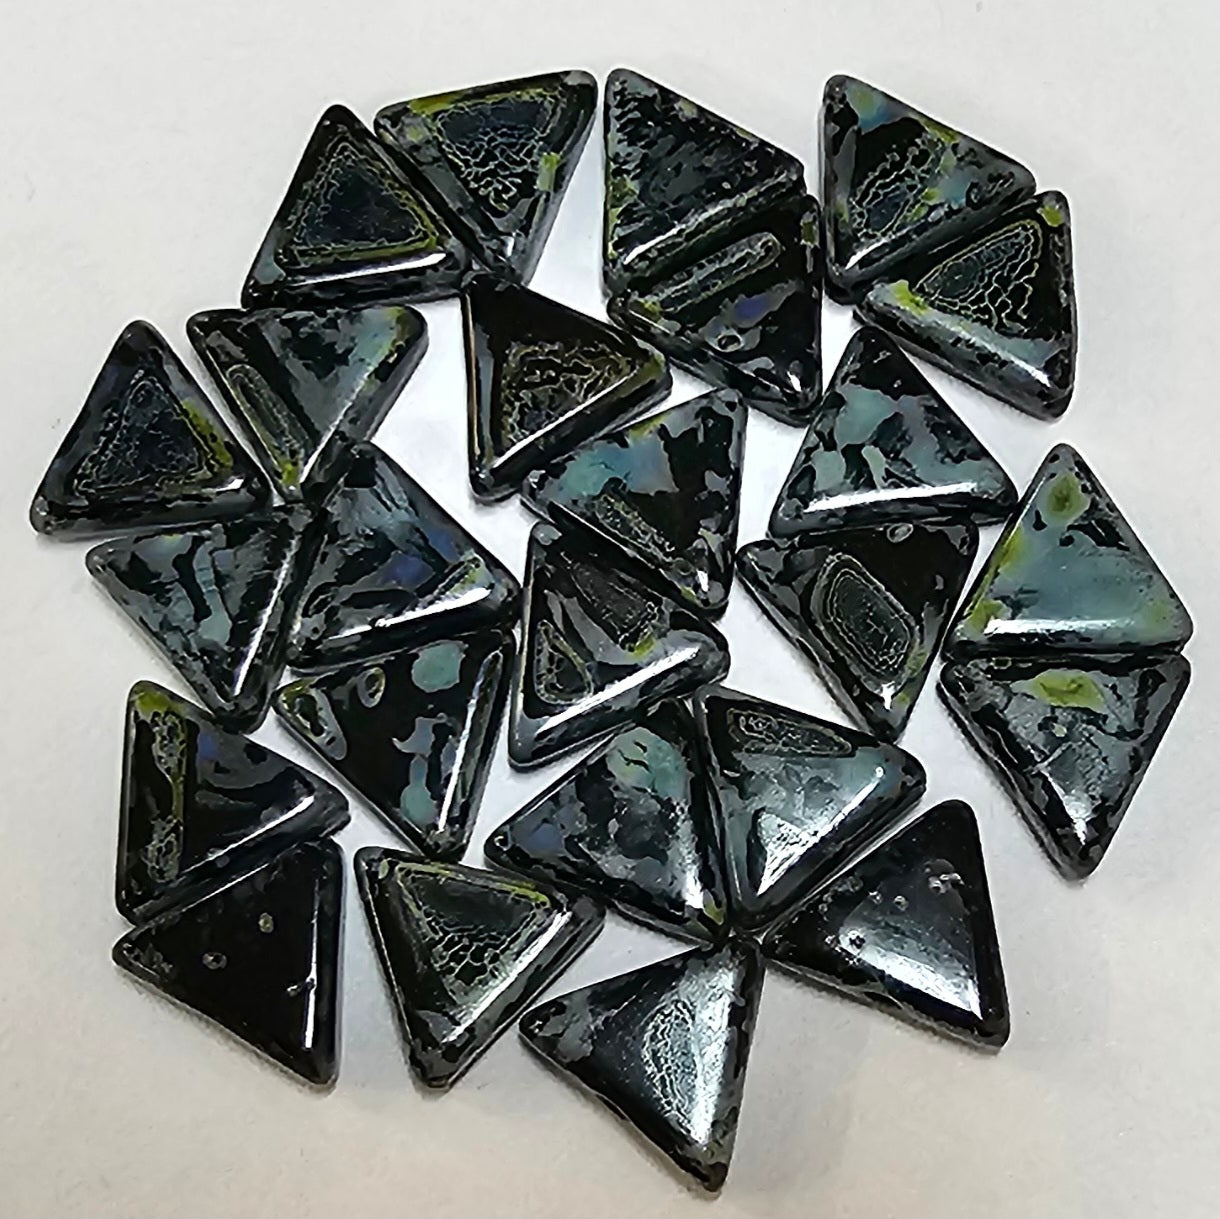 10mm Black Picasso Triangles